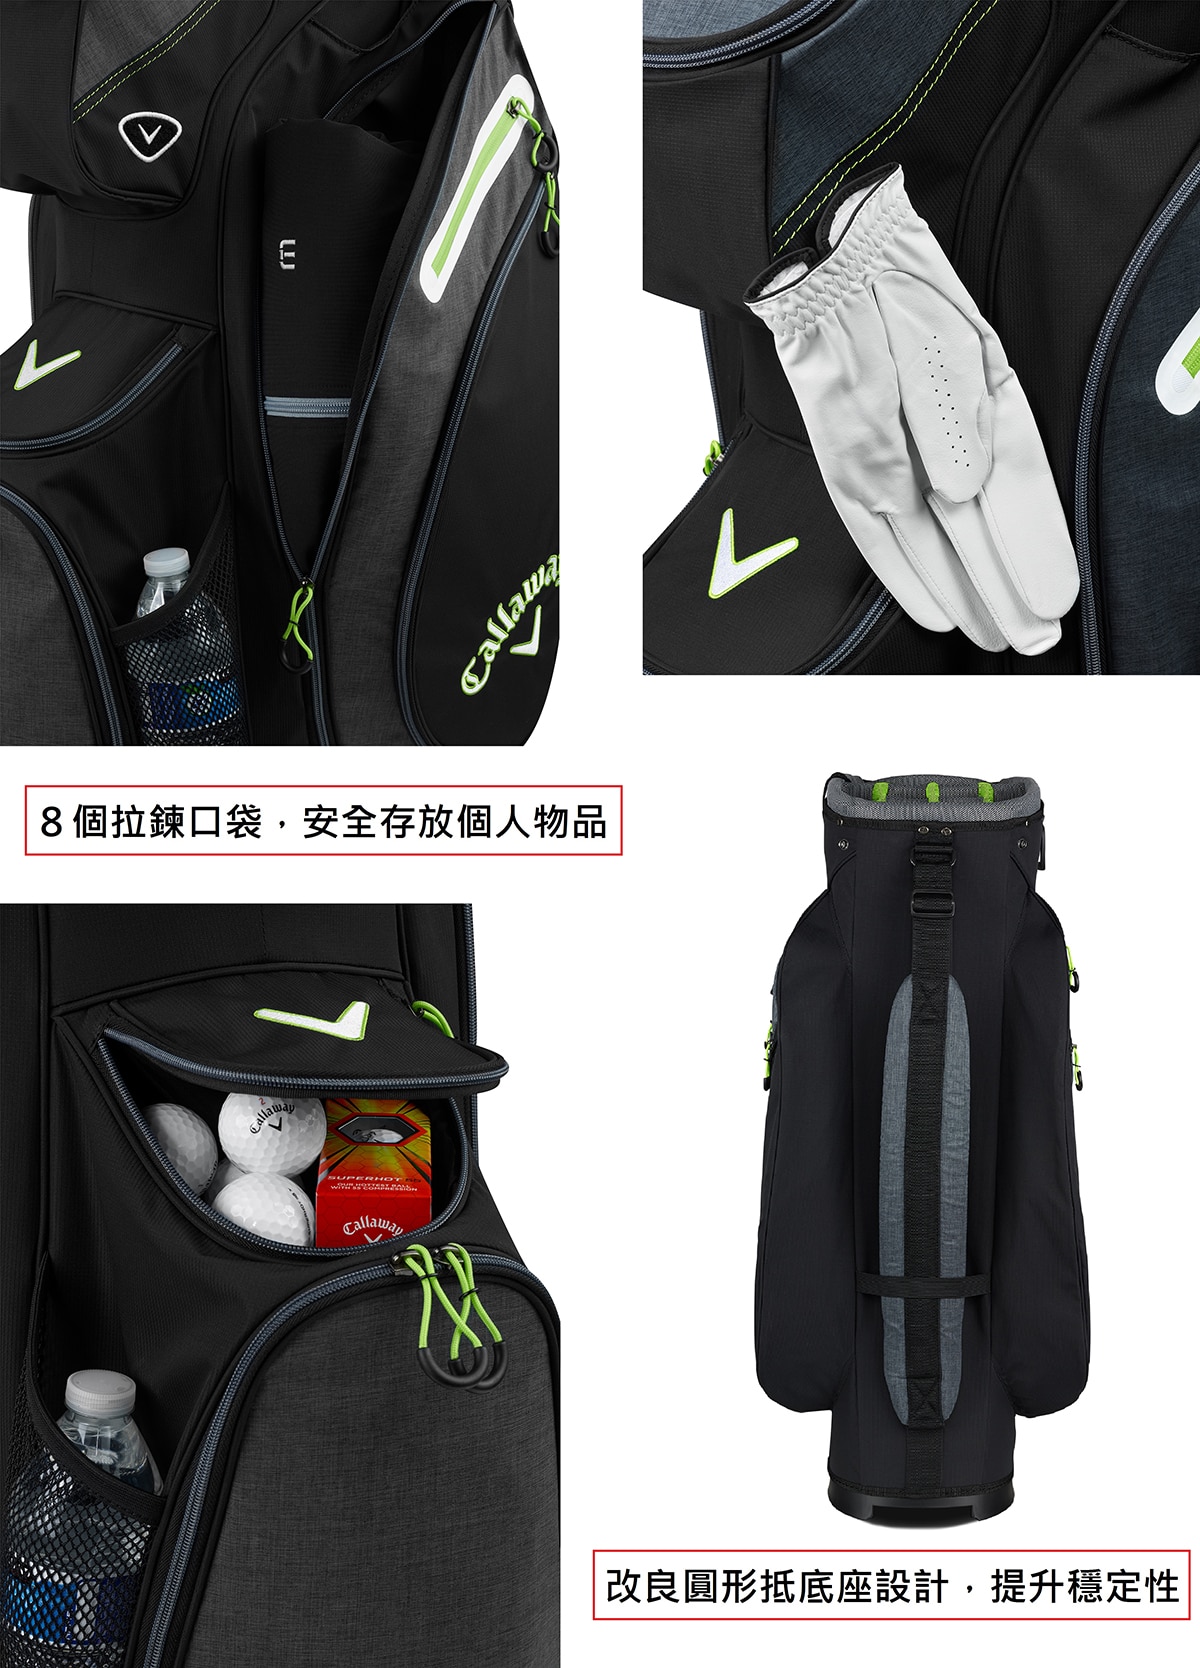 under armour golf bag costco